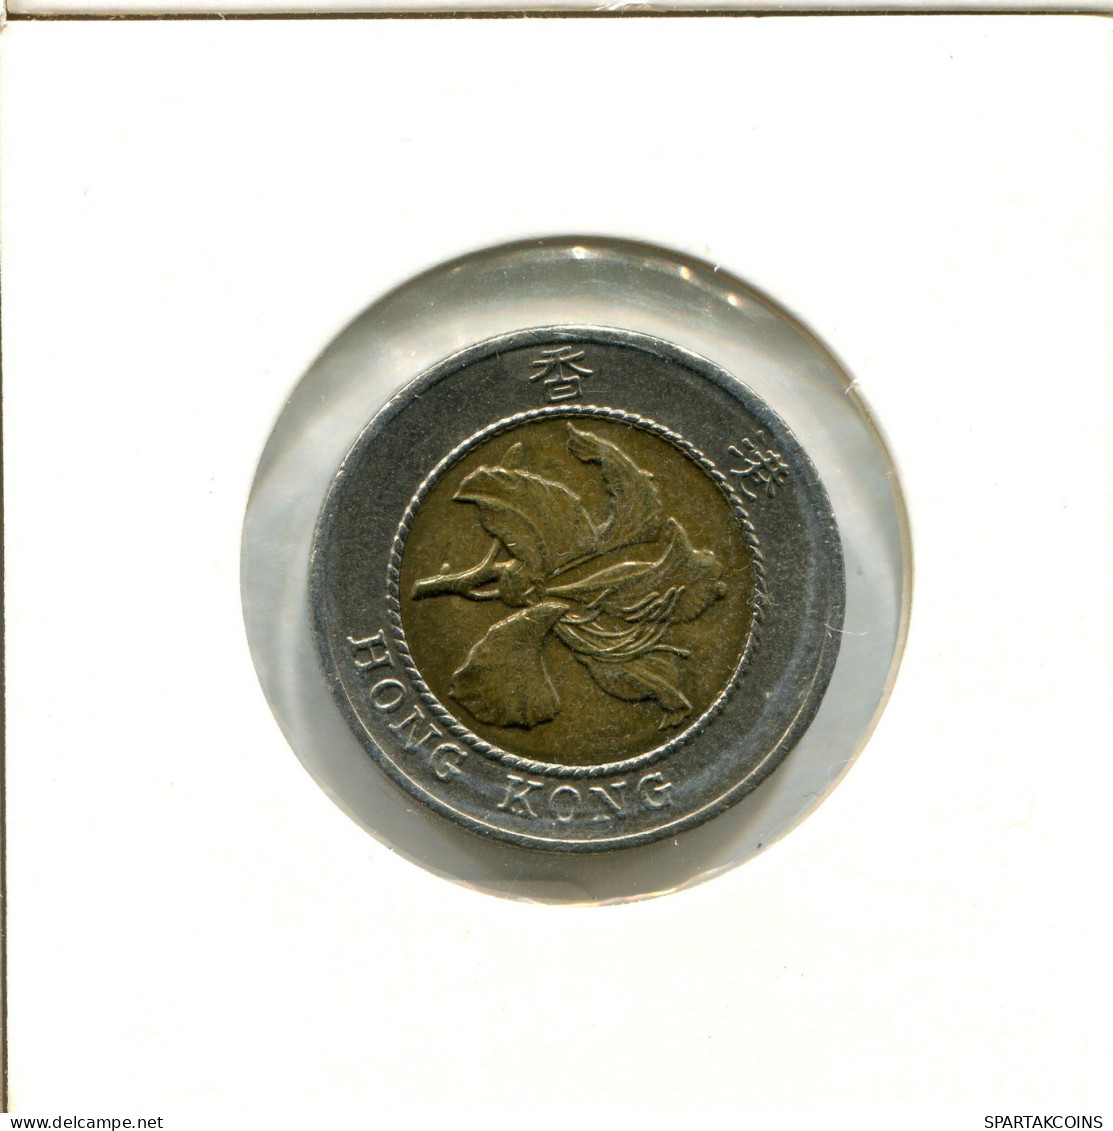 10 DOLLAR 1994 HONG KONG BIMETALLIC Pièce #AX730.F.A - Hong Kong